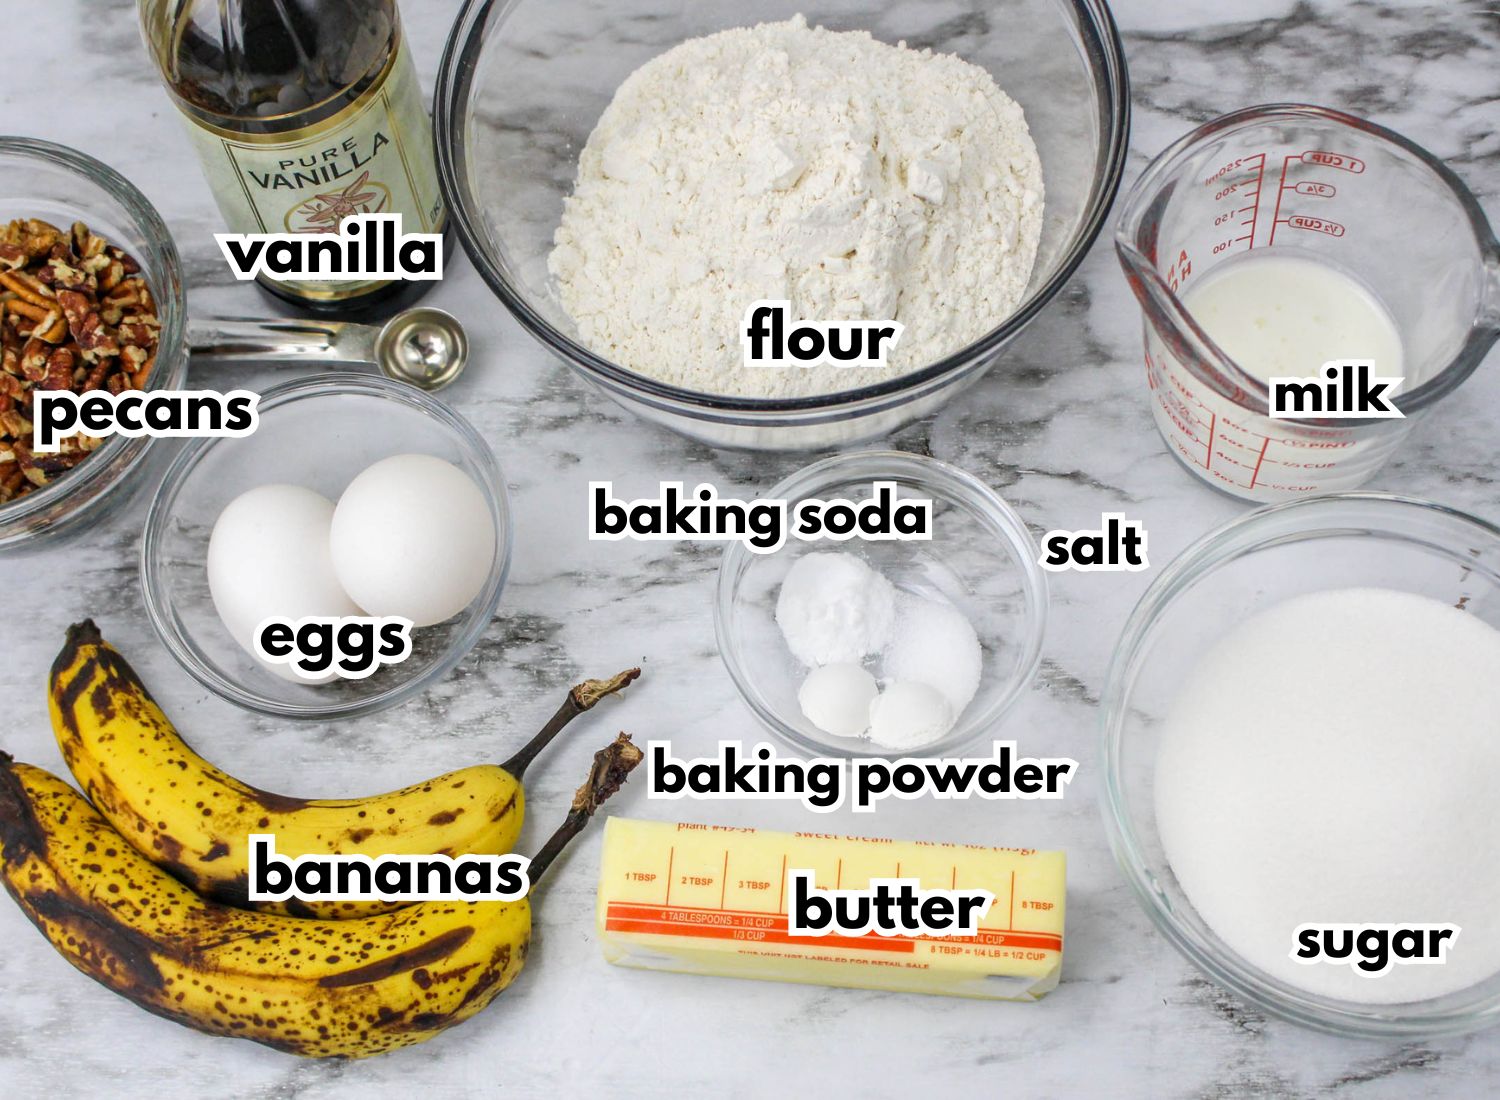 bowls of pecans, vanilla extract, flour, milk, eggs, baking soda, baking powder, salt, sugar, butter and bananas on a counter.